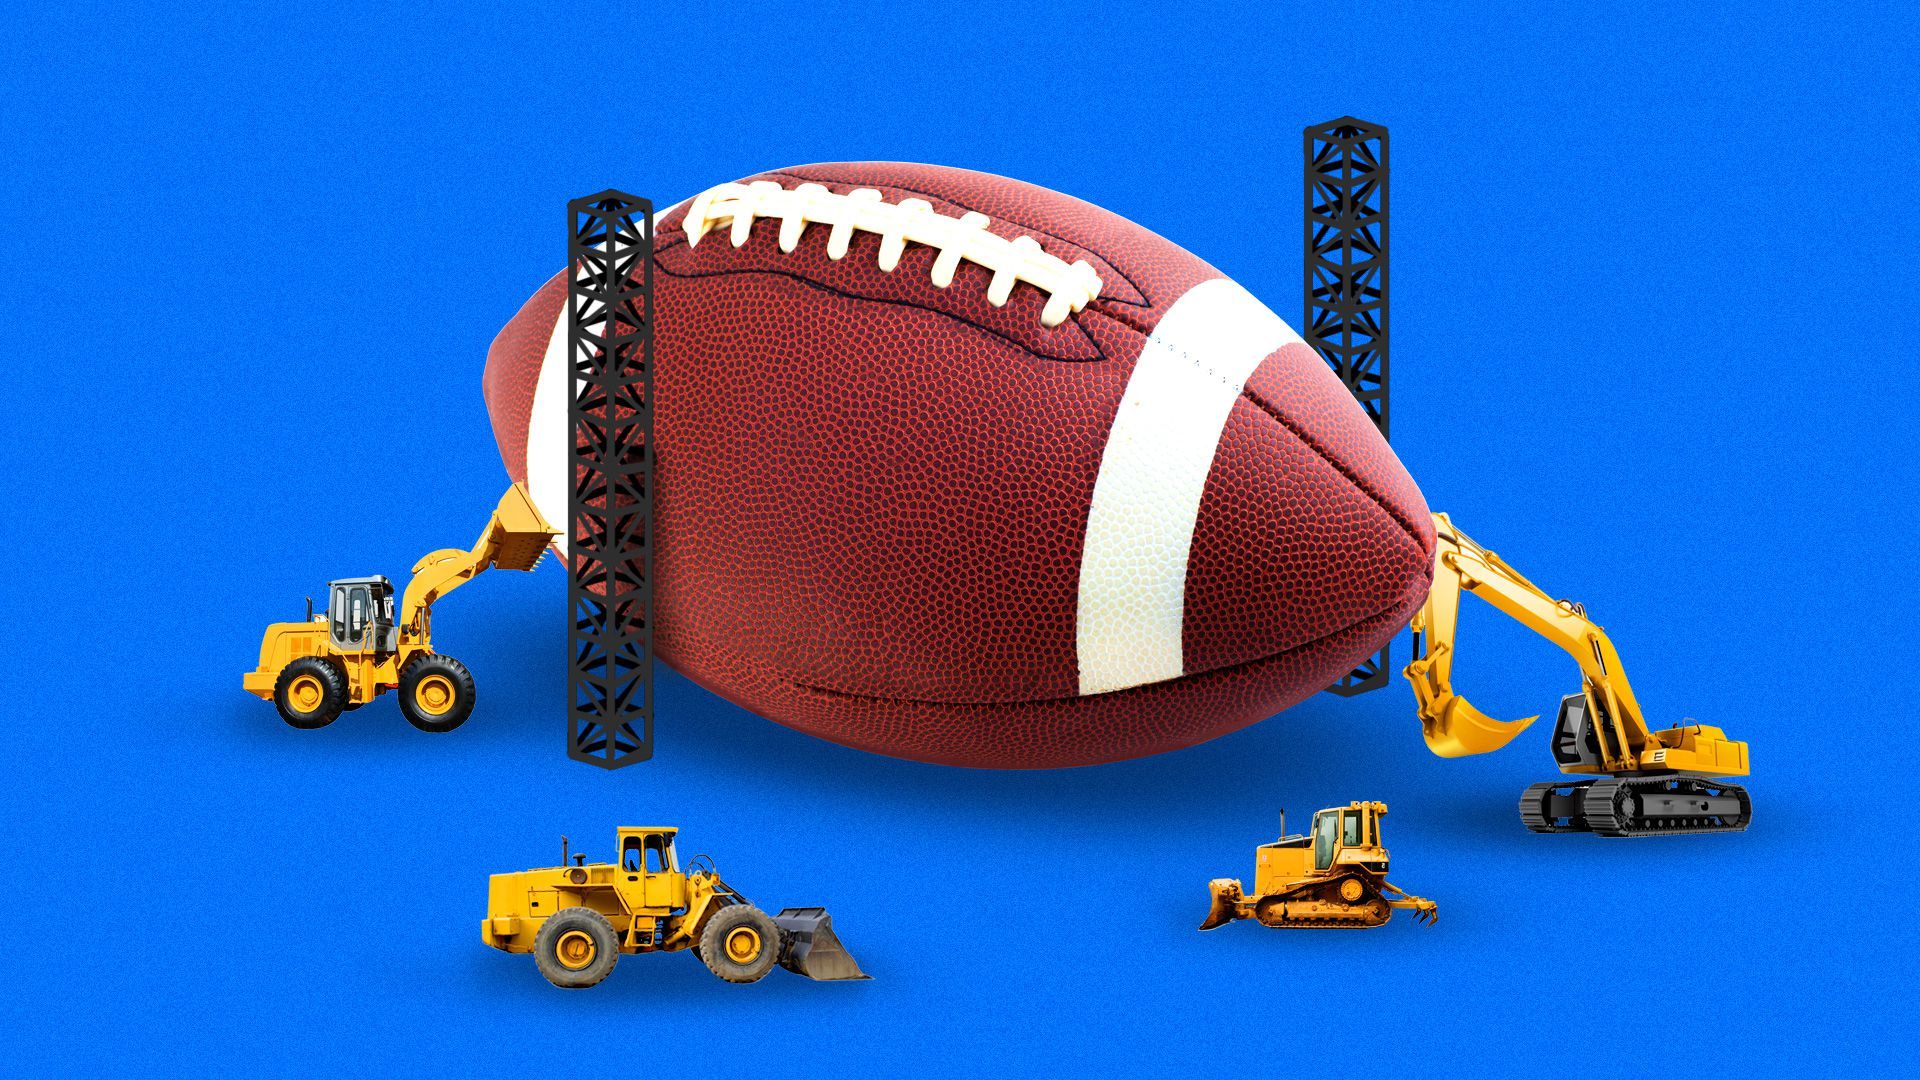 Construction equipment around a giant football